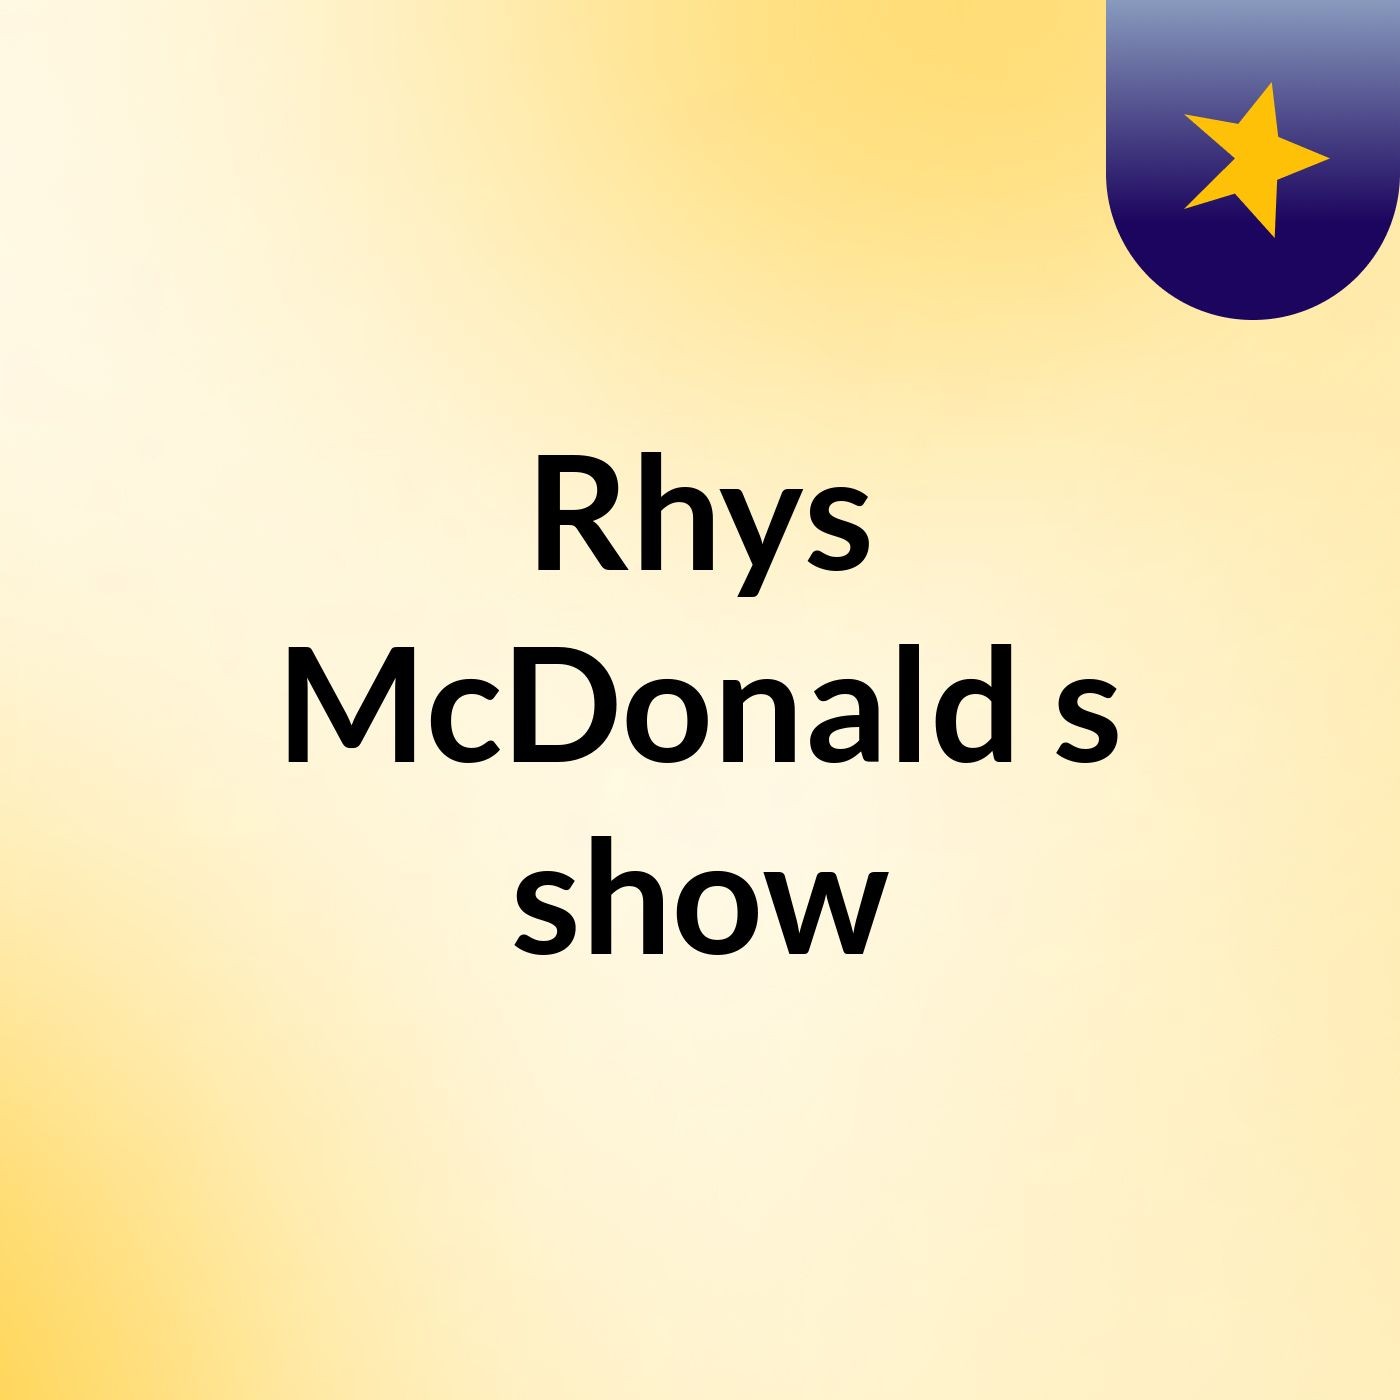 Rhys McDonald's show